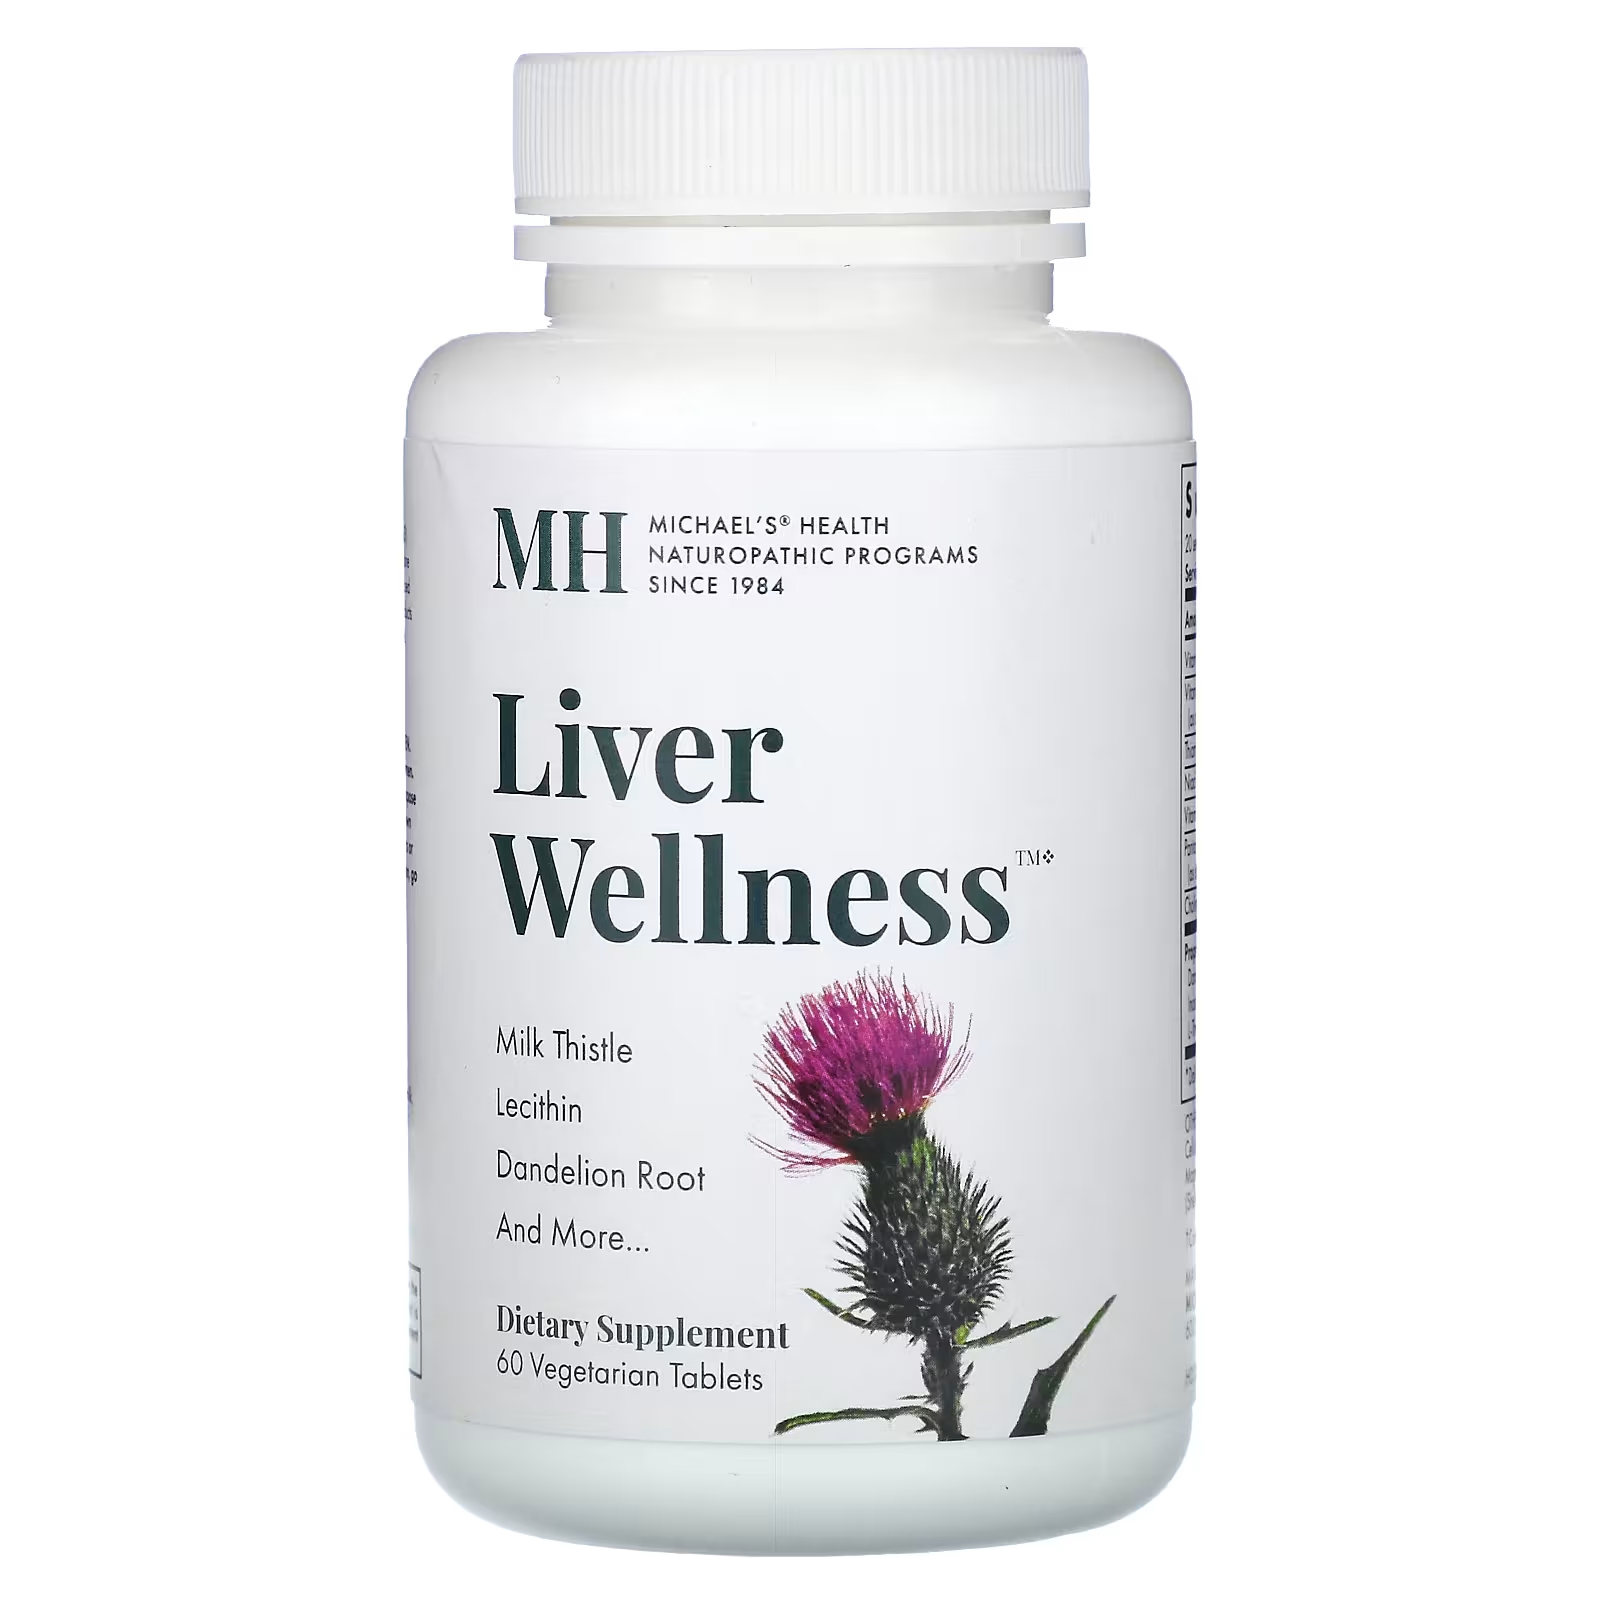 Пищевая добавка Michael's Naturopathic Liver Wellness, 60 вегетарианских таблеток